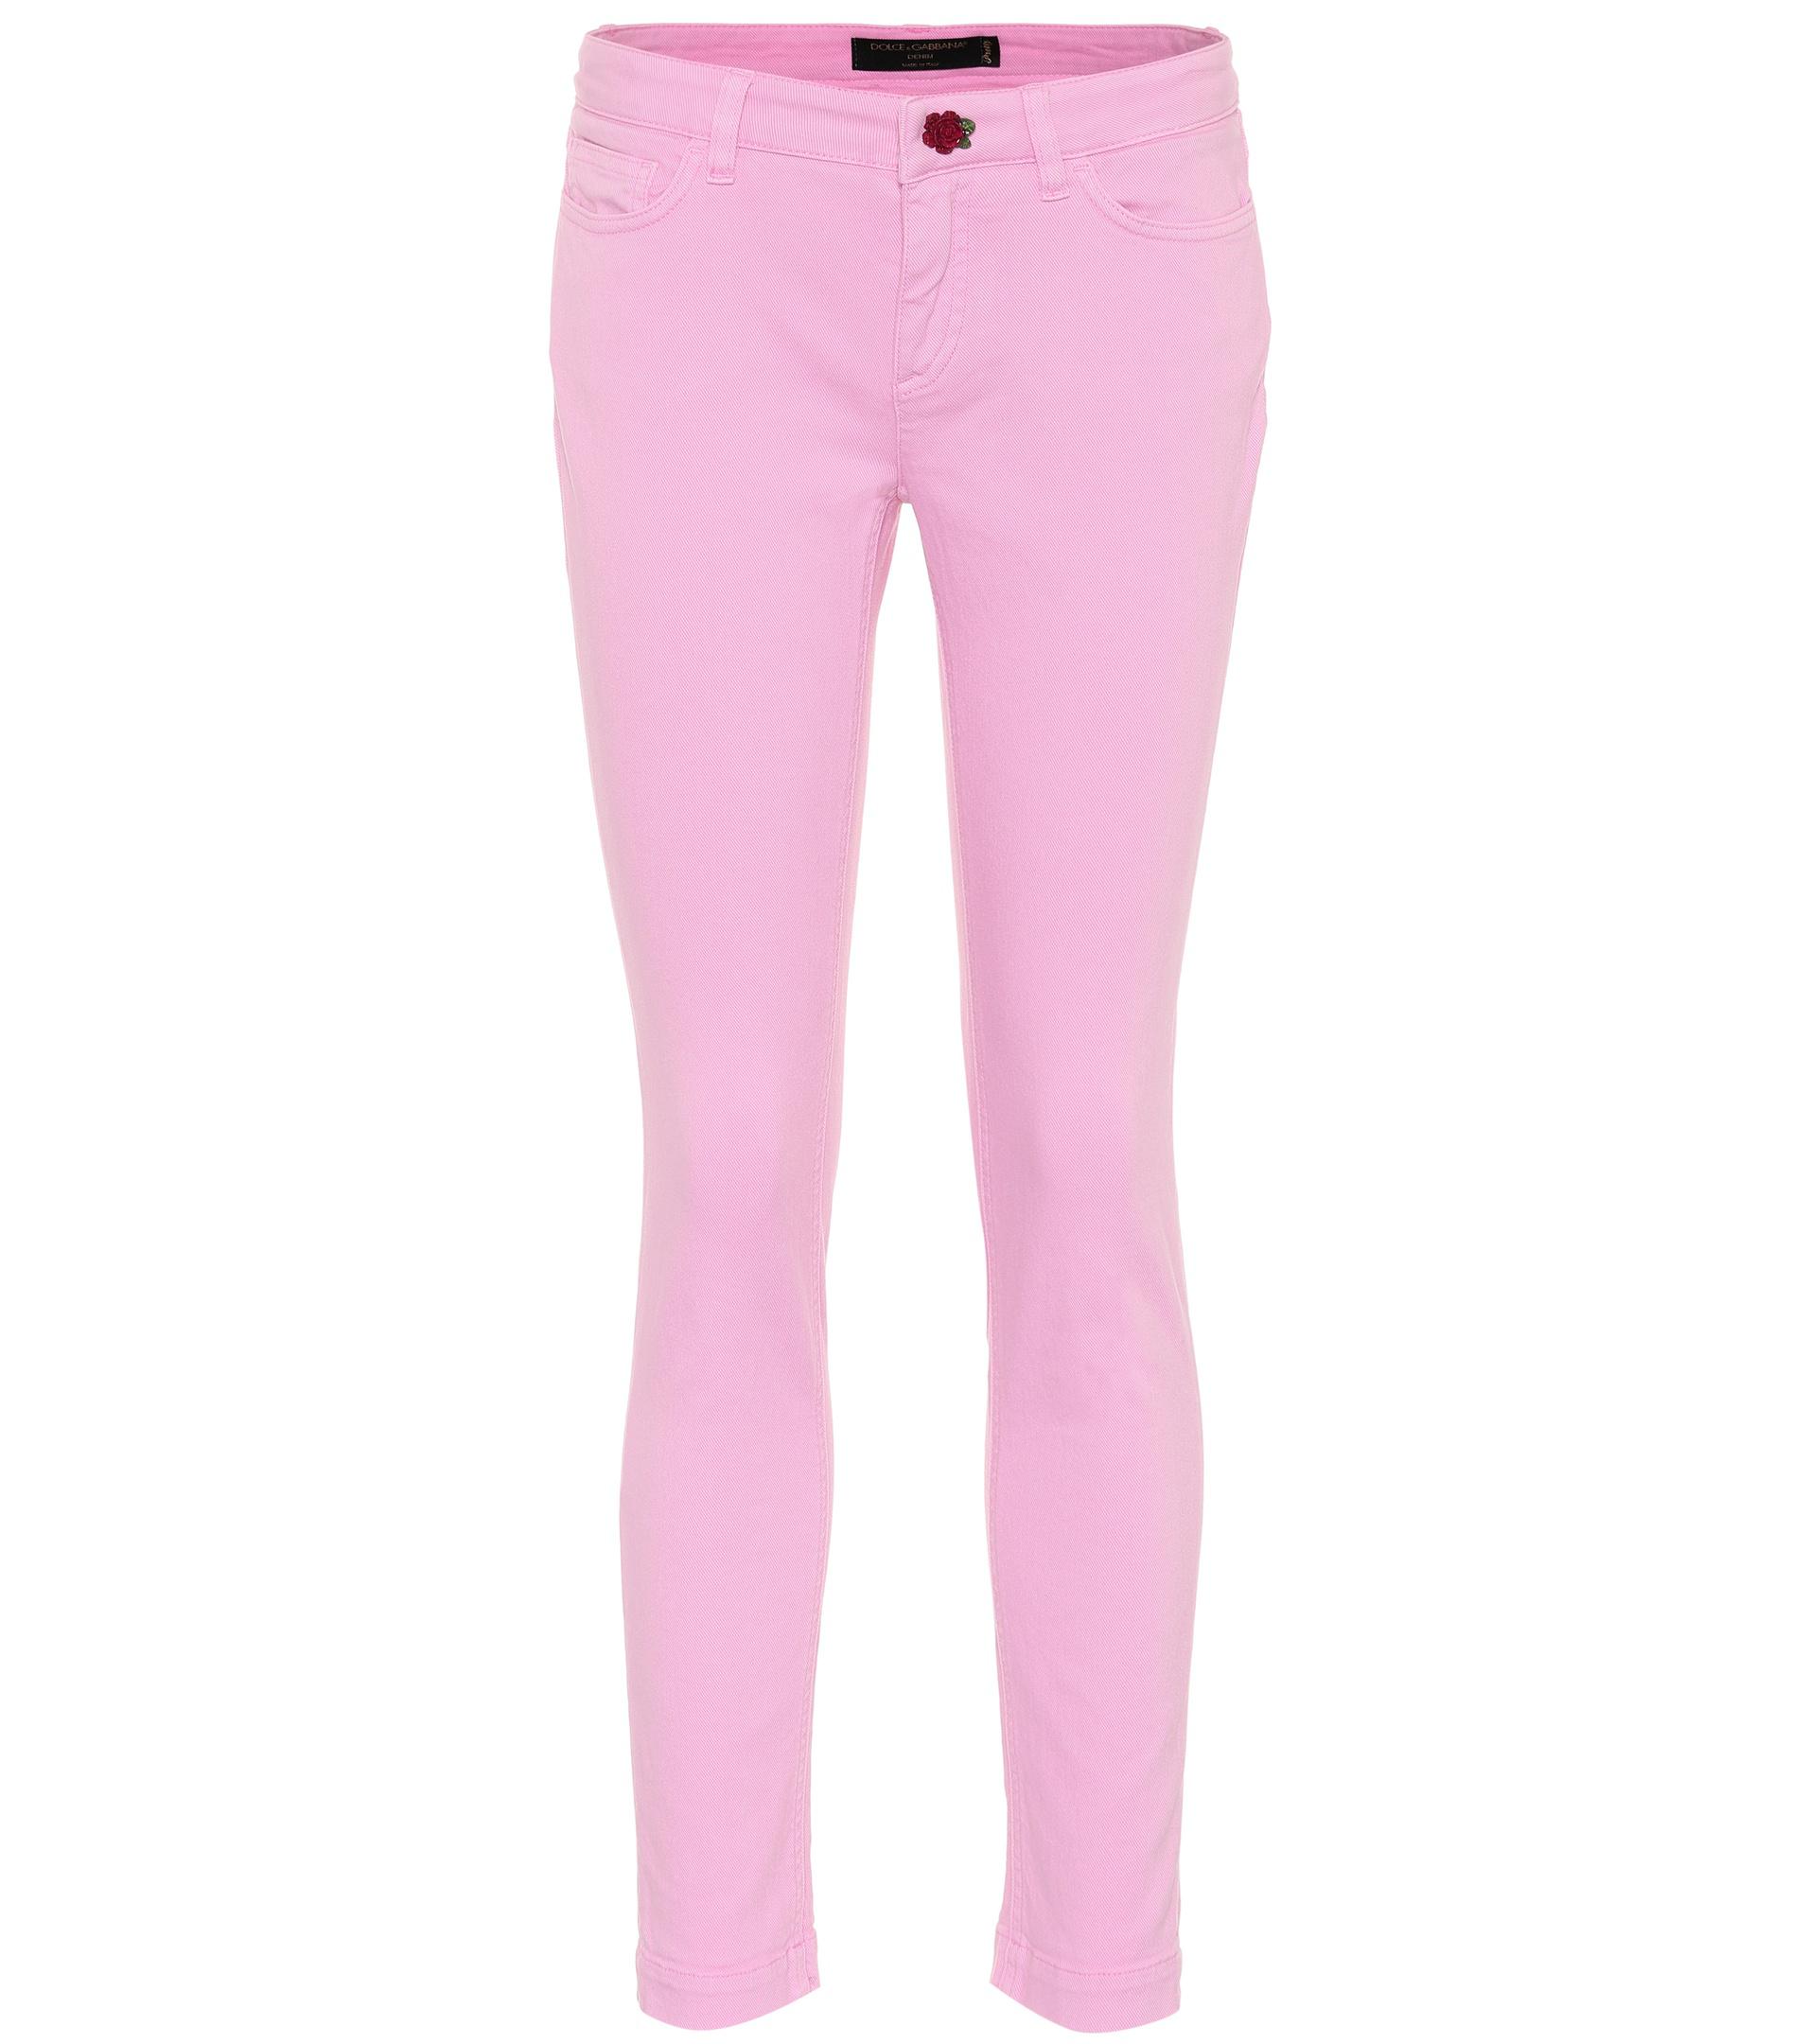 Dolce & Gabbana Denim Embellished Skinny Jeans in Pink - Lyst